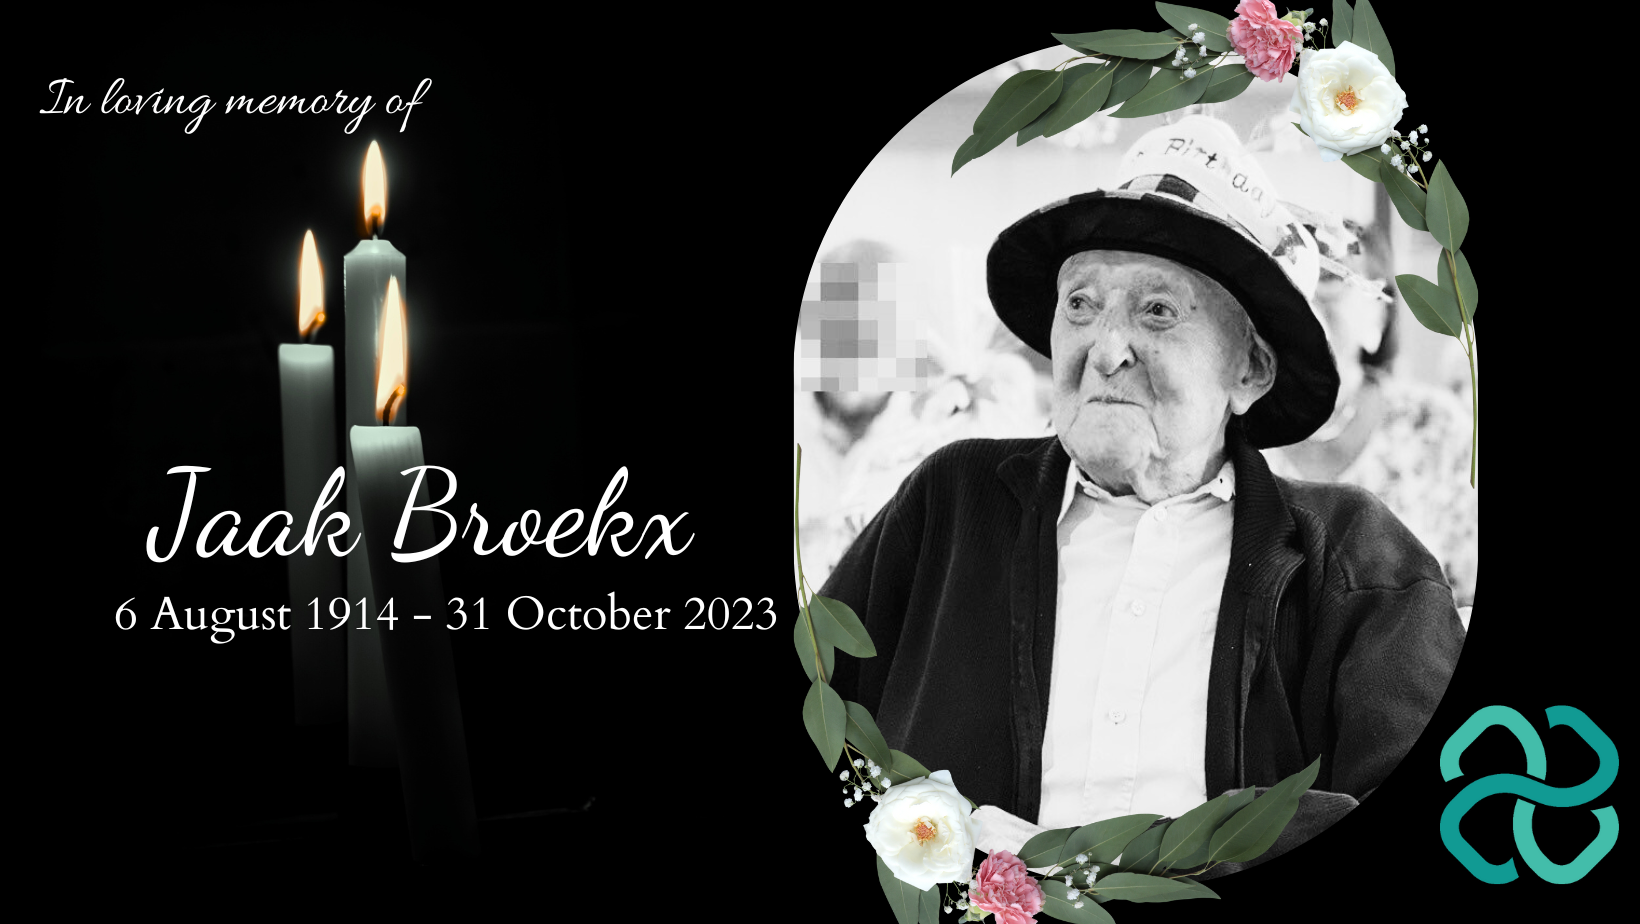 Jaak Broekx, Belgium’s Oldest Living Man, Passed Away at 109